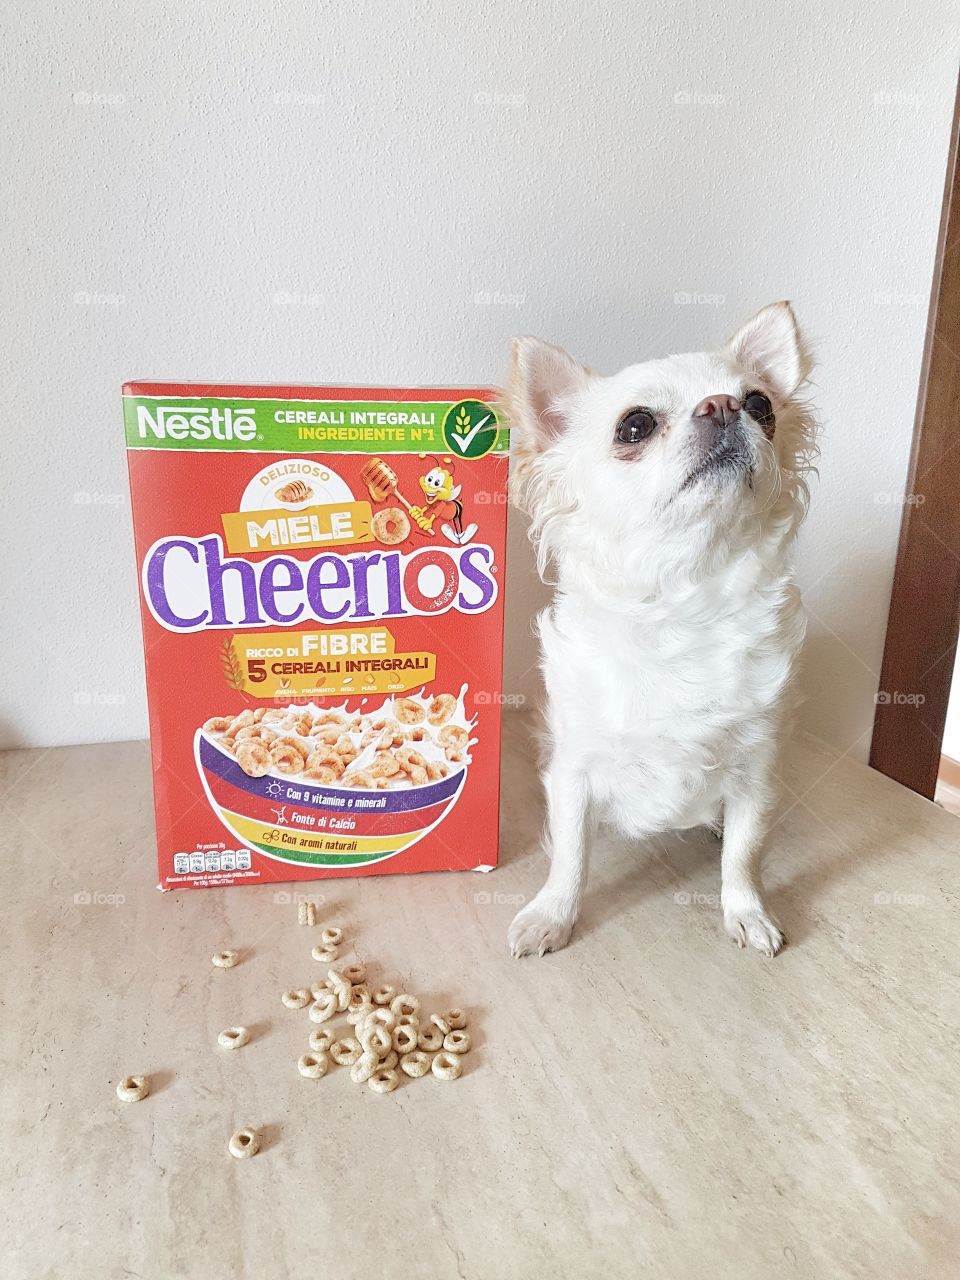 chihuahua, don't you prefer a Cheerios!?